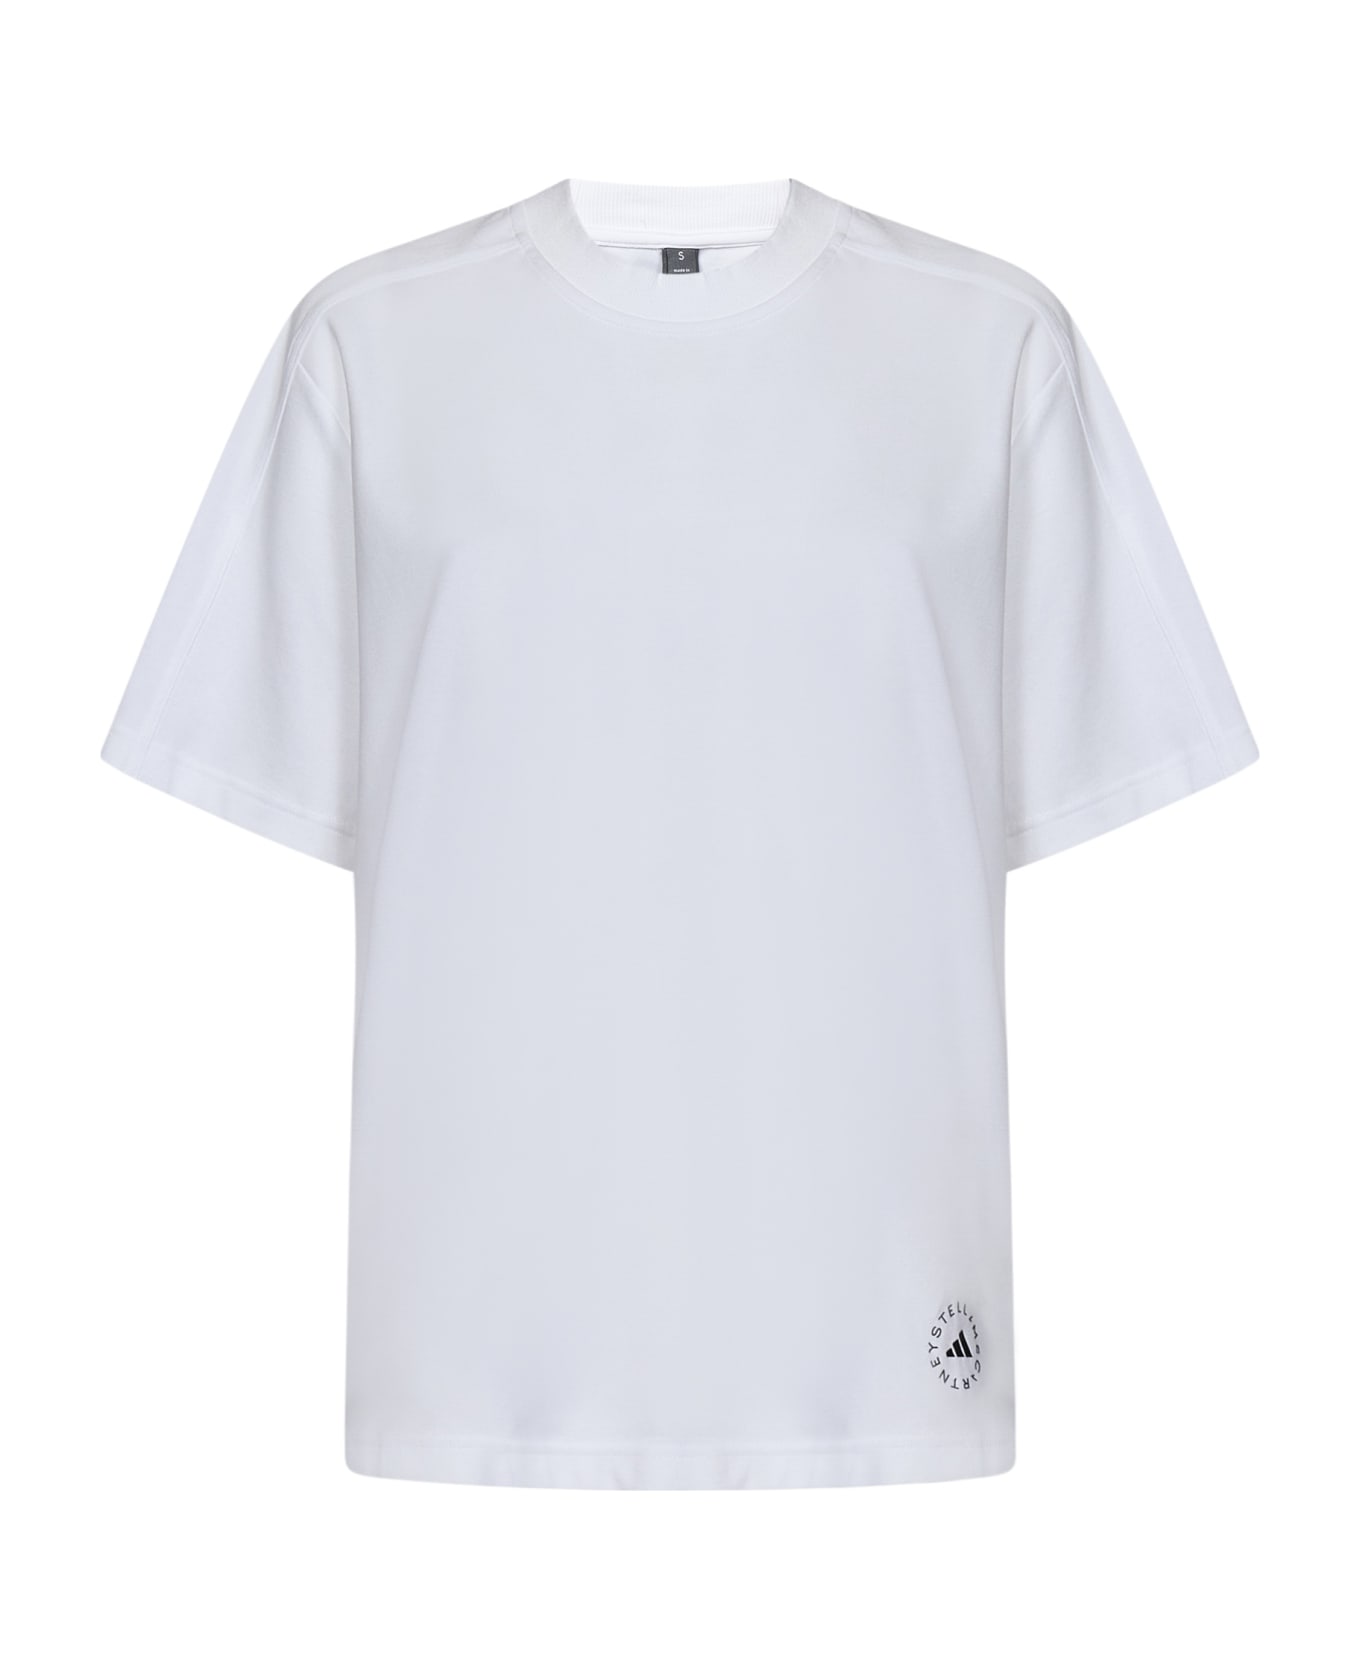 Adidas by Stella McCartney By Stella Mccartney T-shirt - White